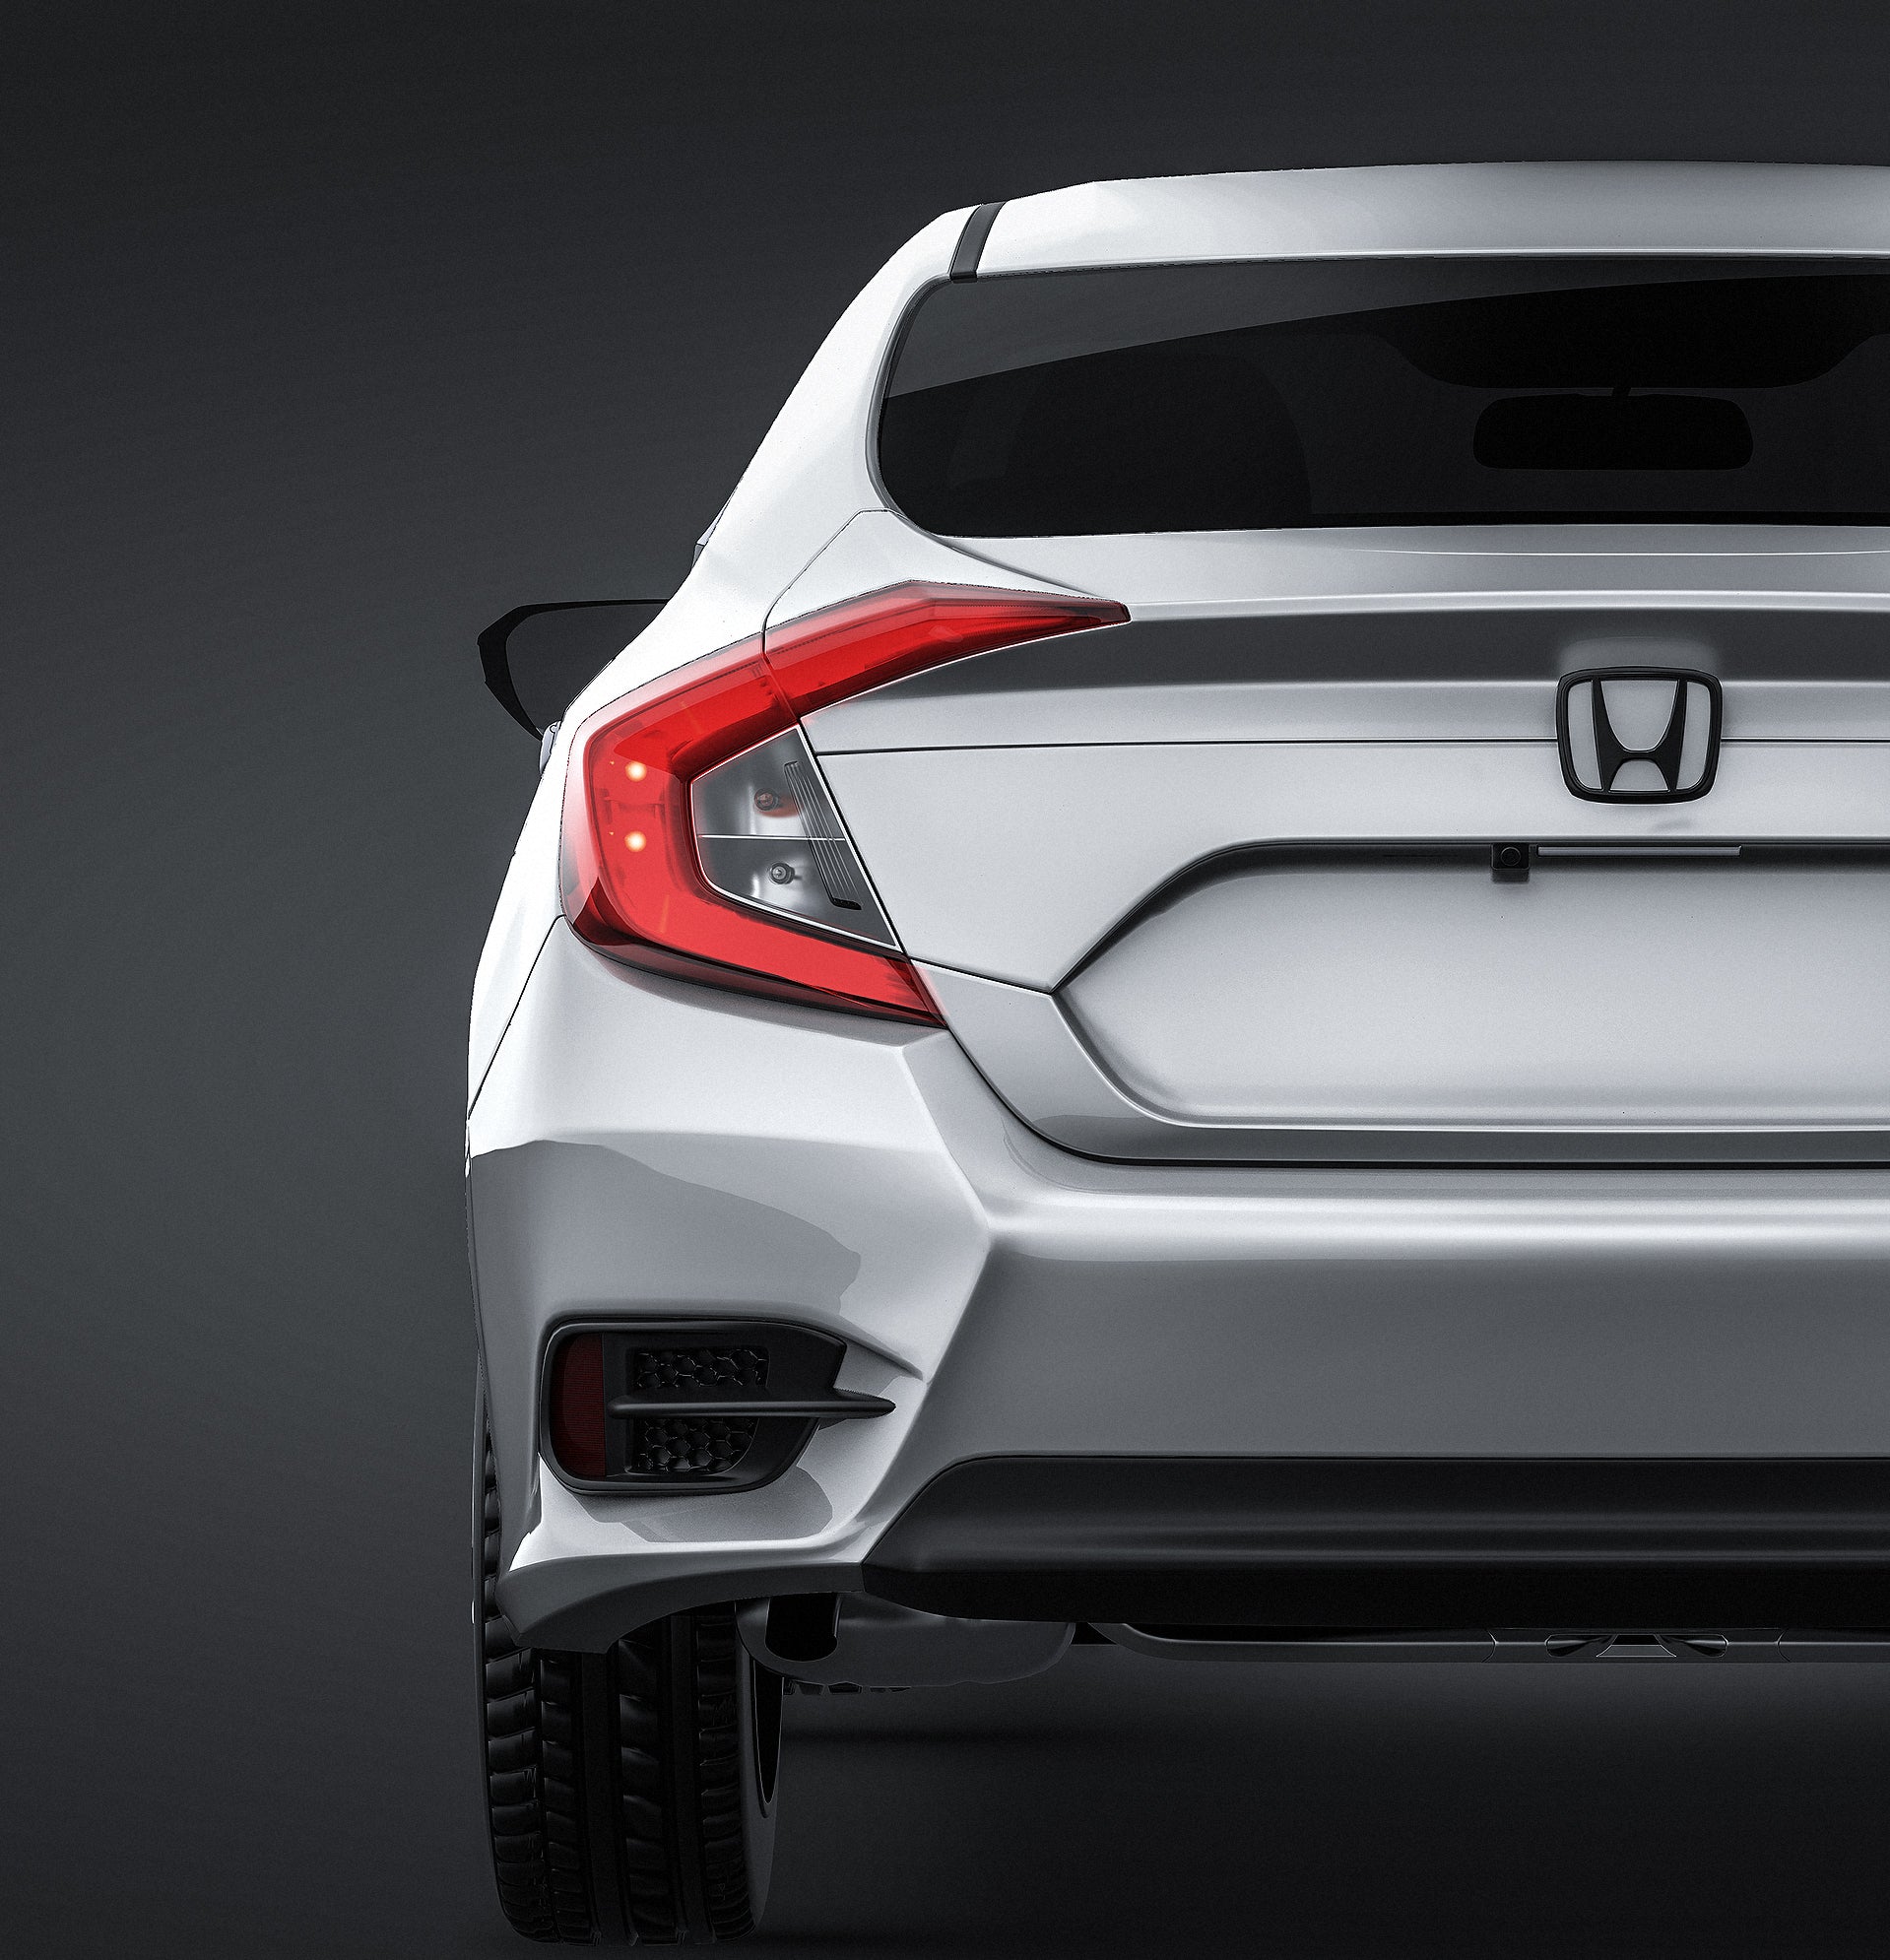 Honda Civic Sedan LX 2016 glossy finish - all sides Car Mockup Template.psd